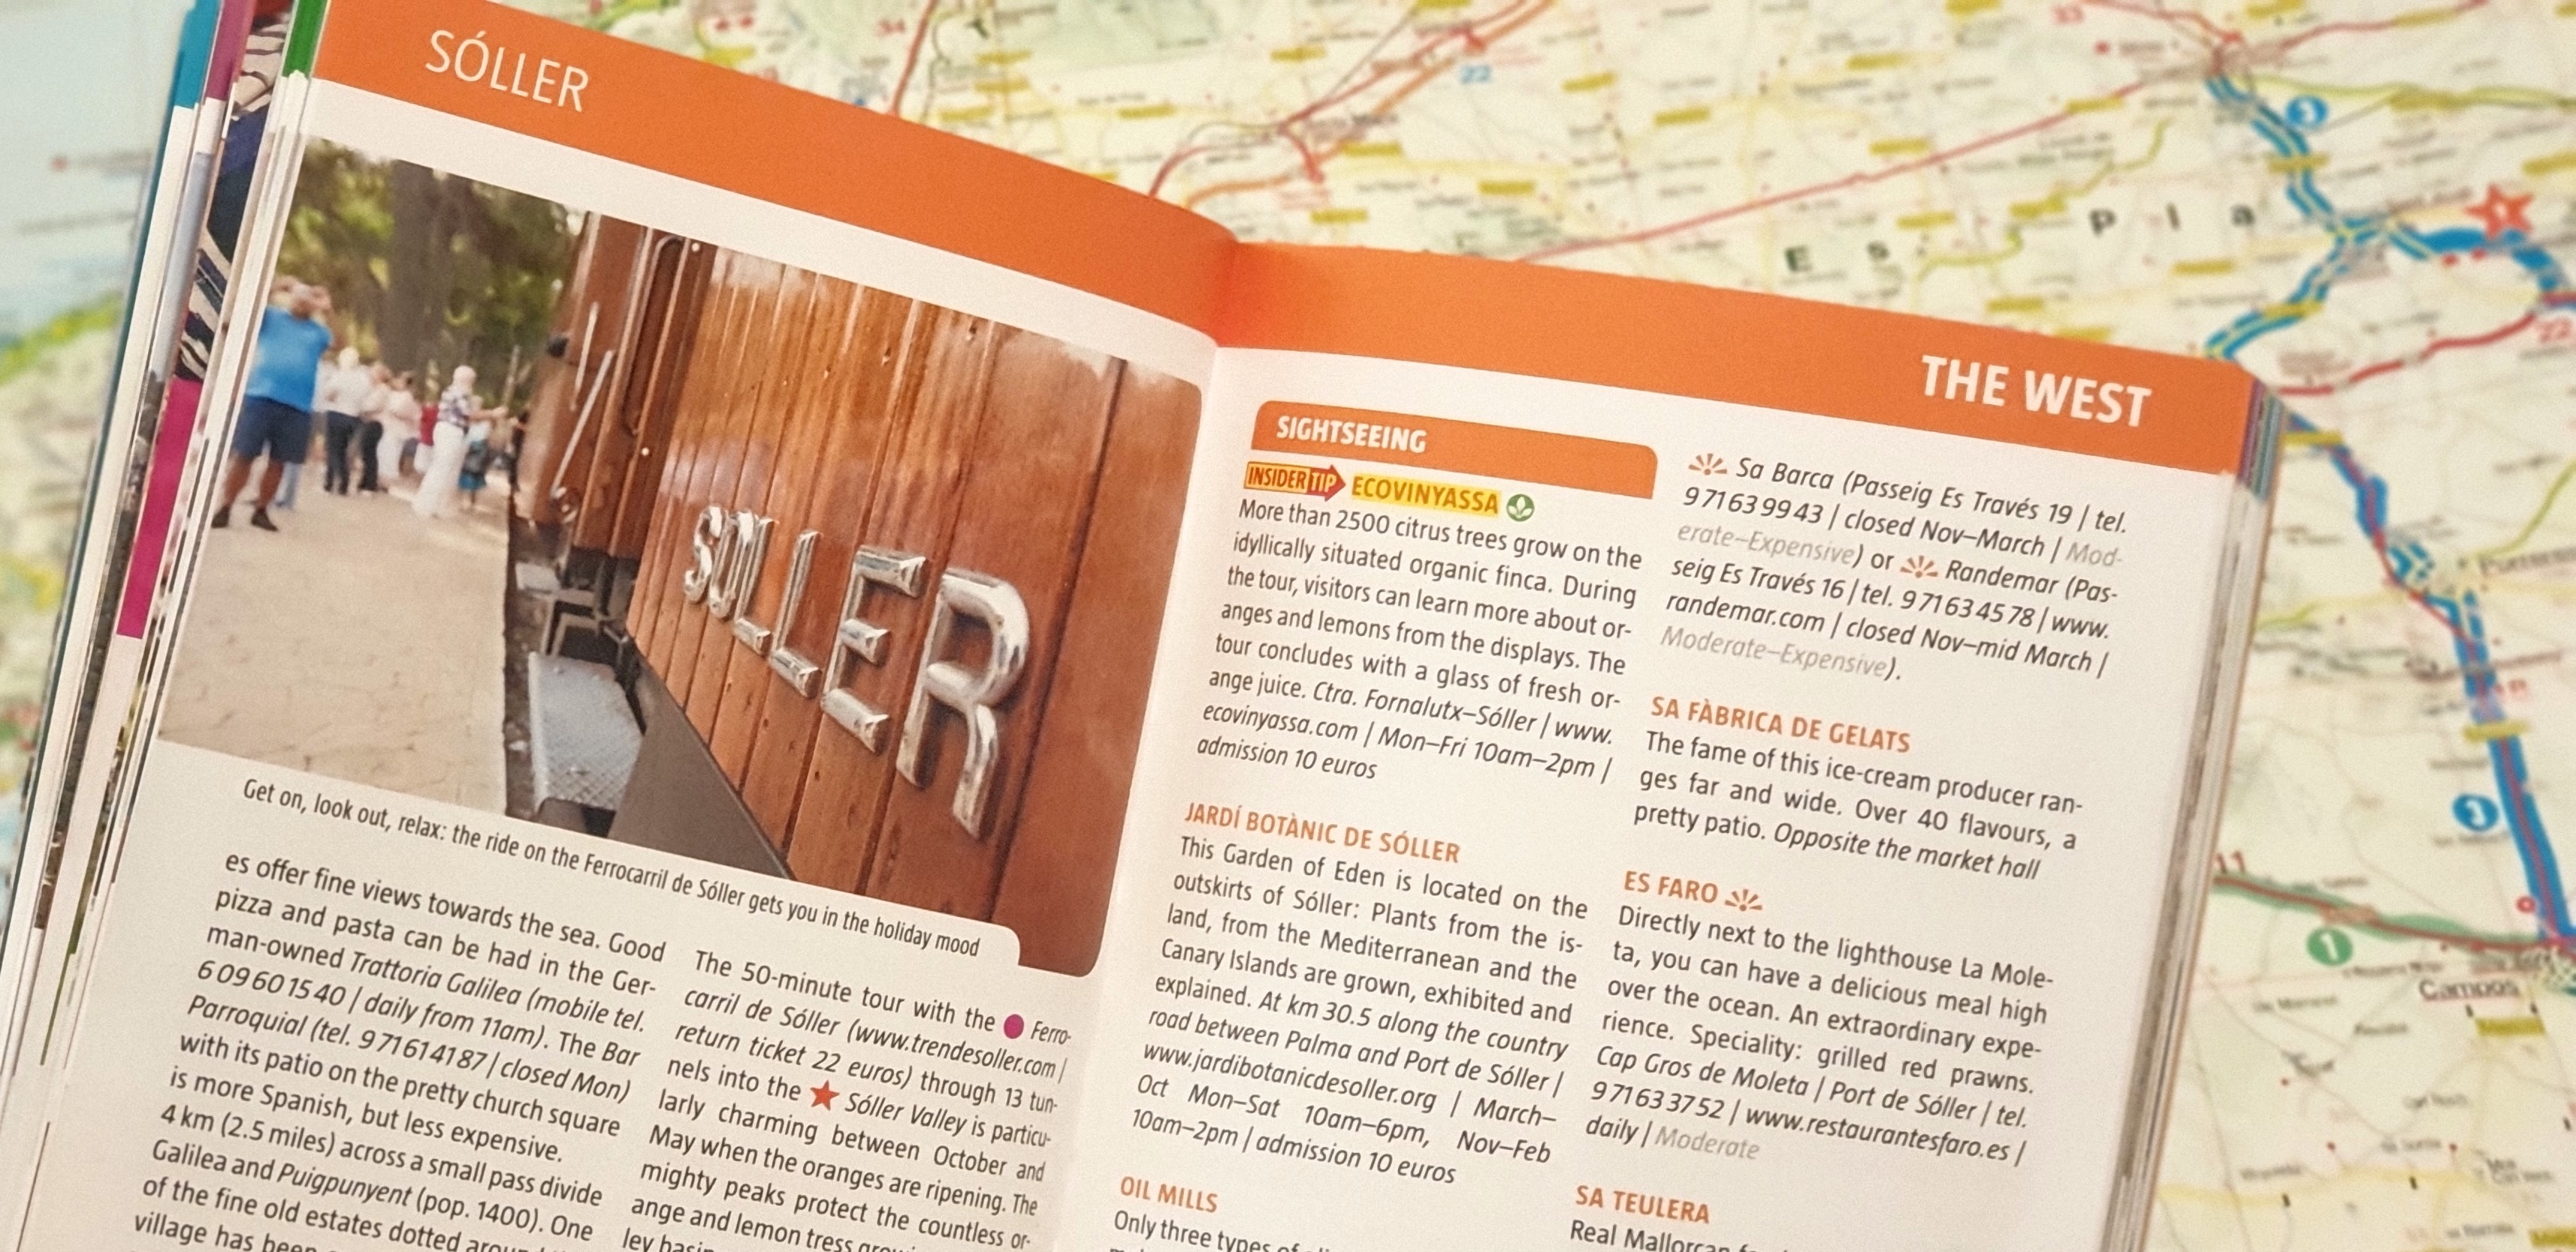 Marco Polo Guide Book open over a map of Soller and Mallorca